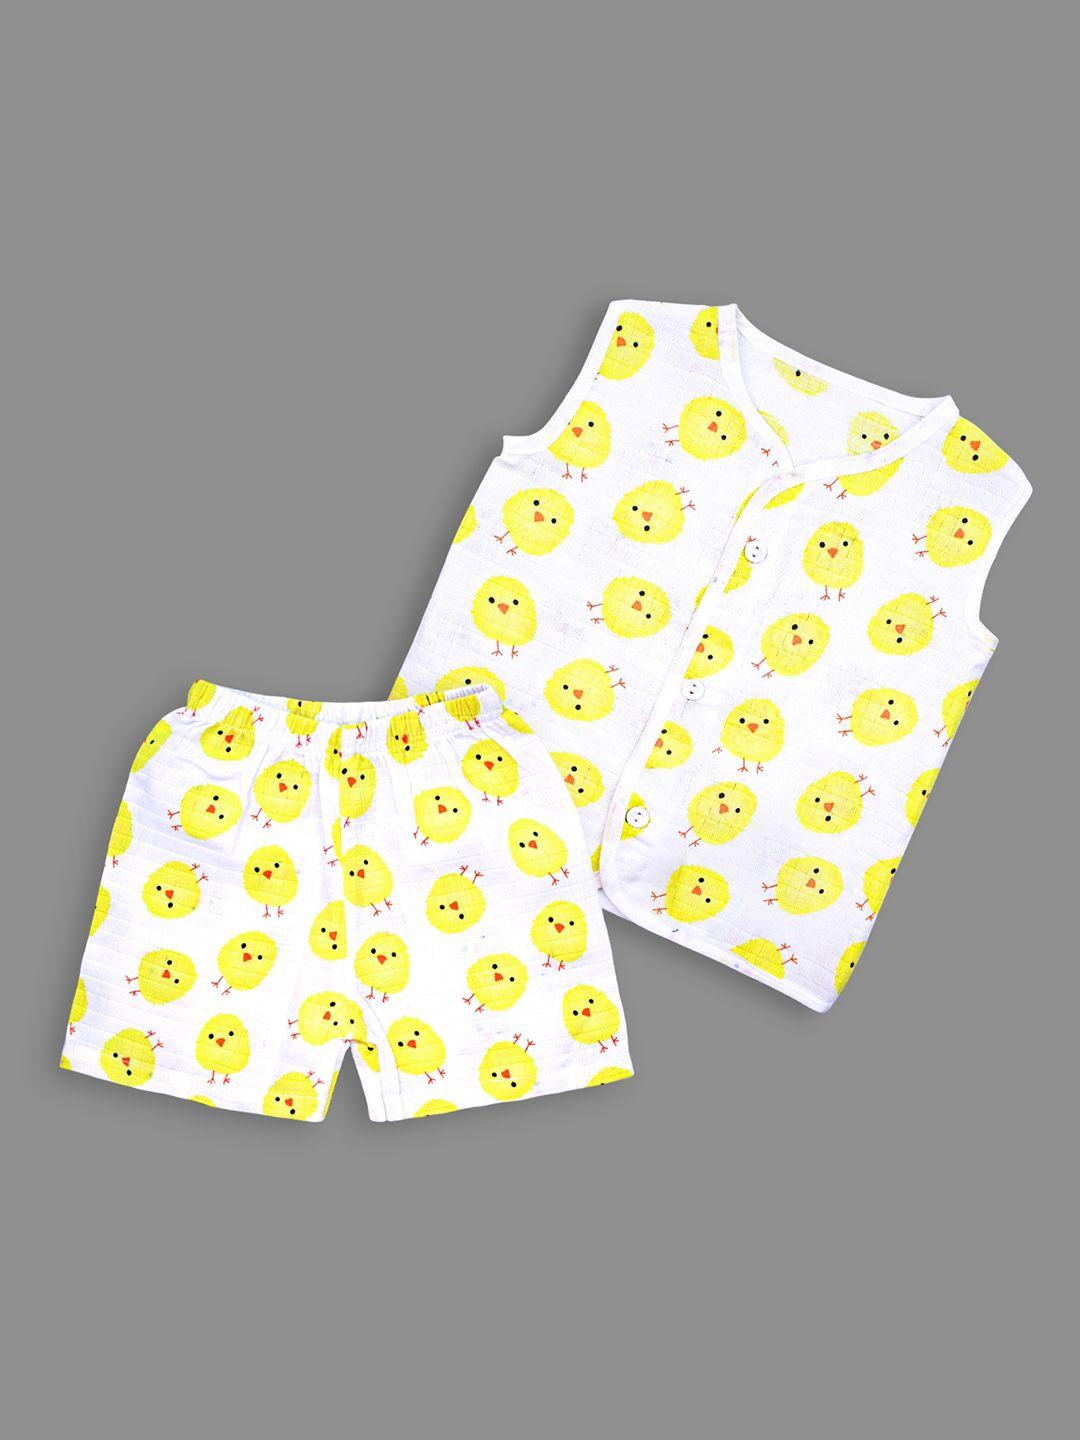 born babies printed muslin cotton jabla with shorts